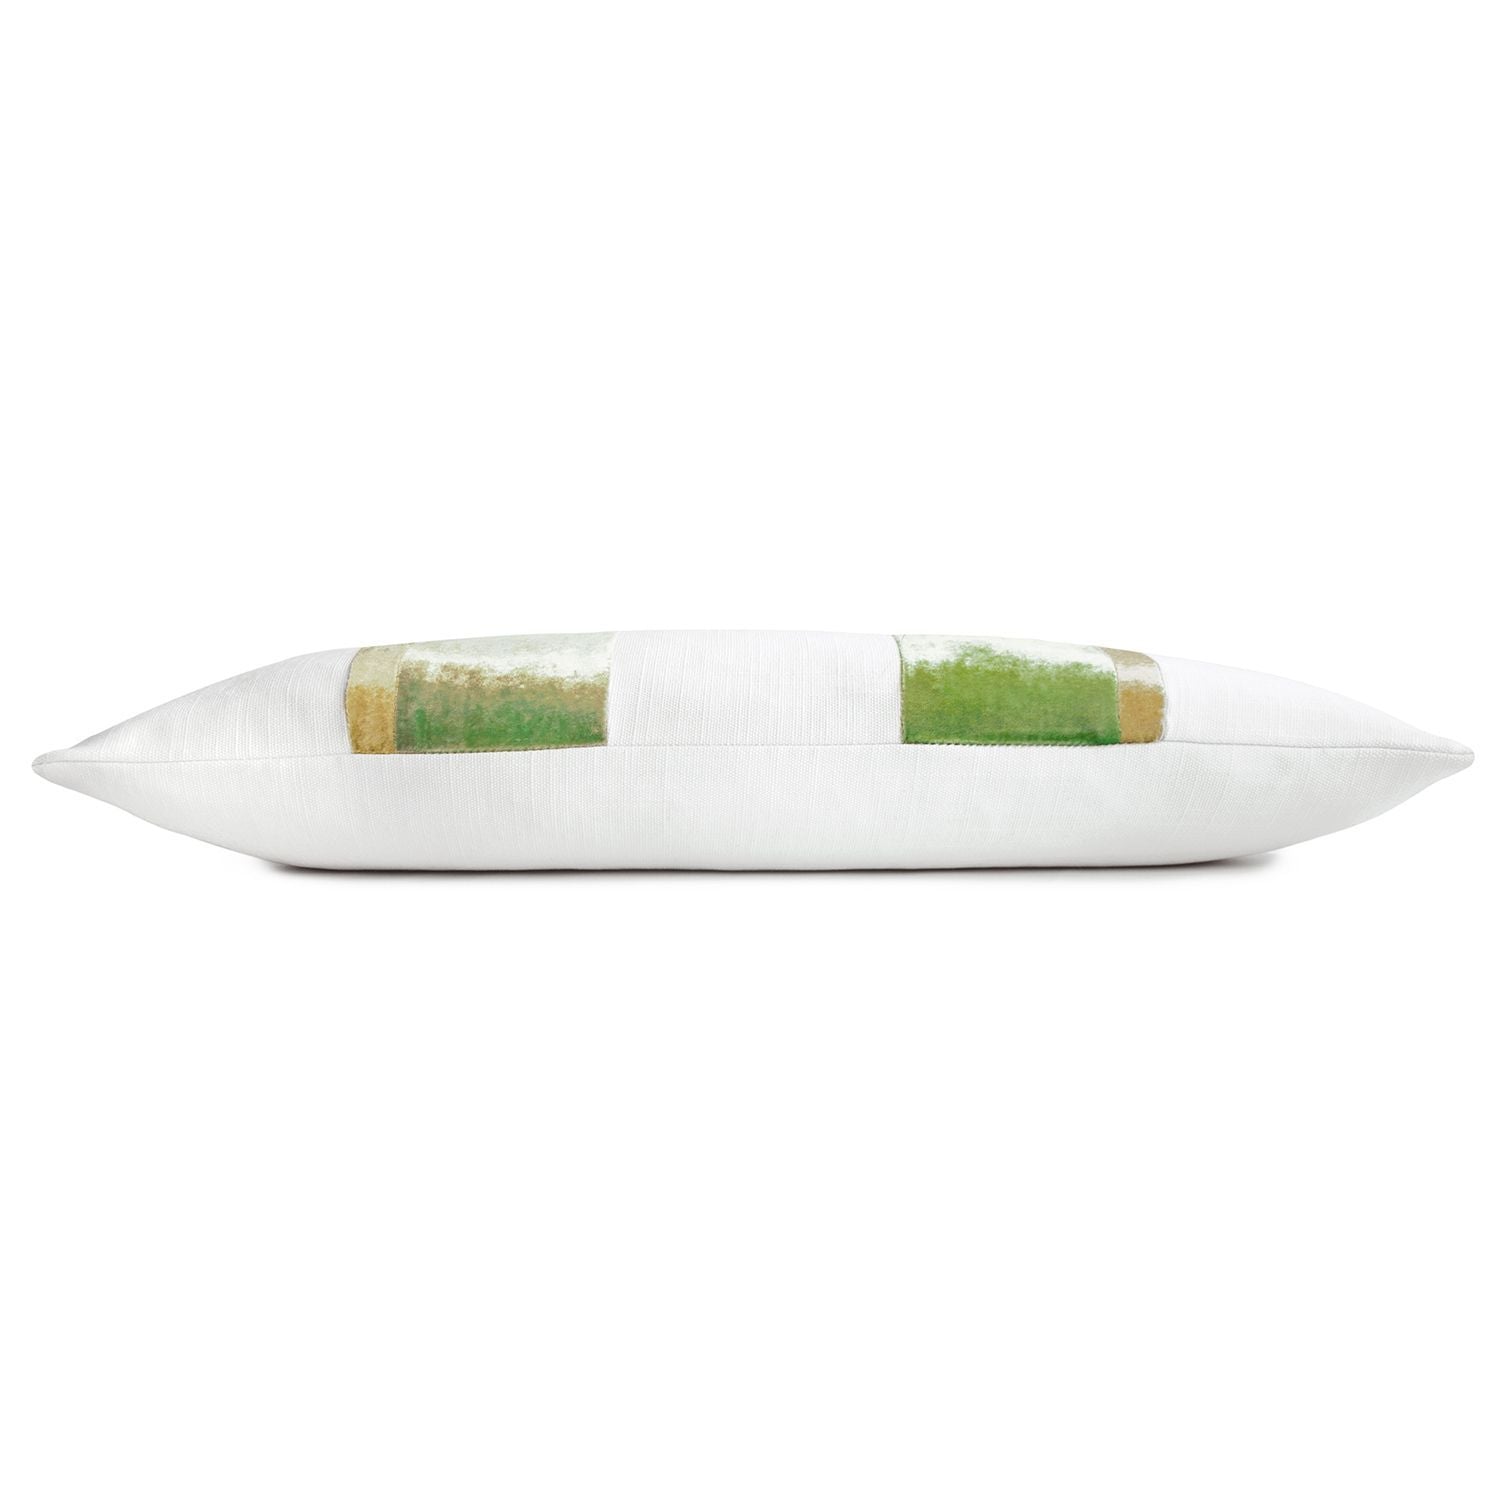 Fig Linens - Grass Stripe Oblong Decorative Pillow by Kevin O'Brien Studio